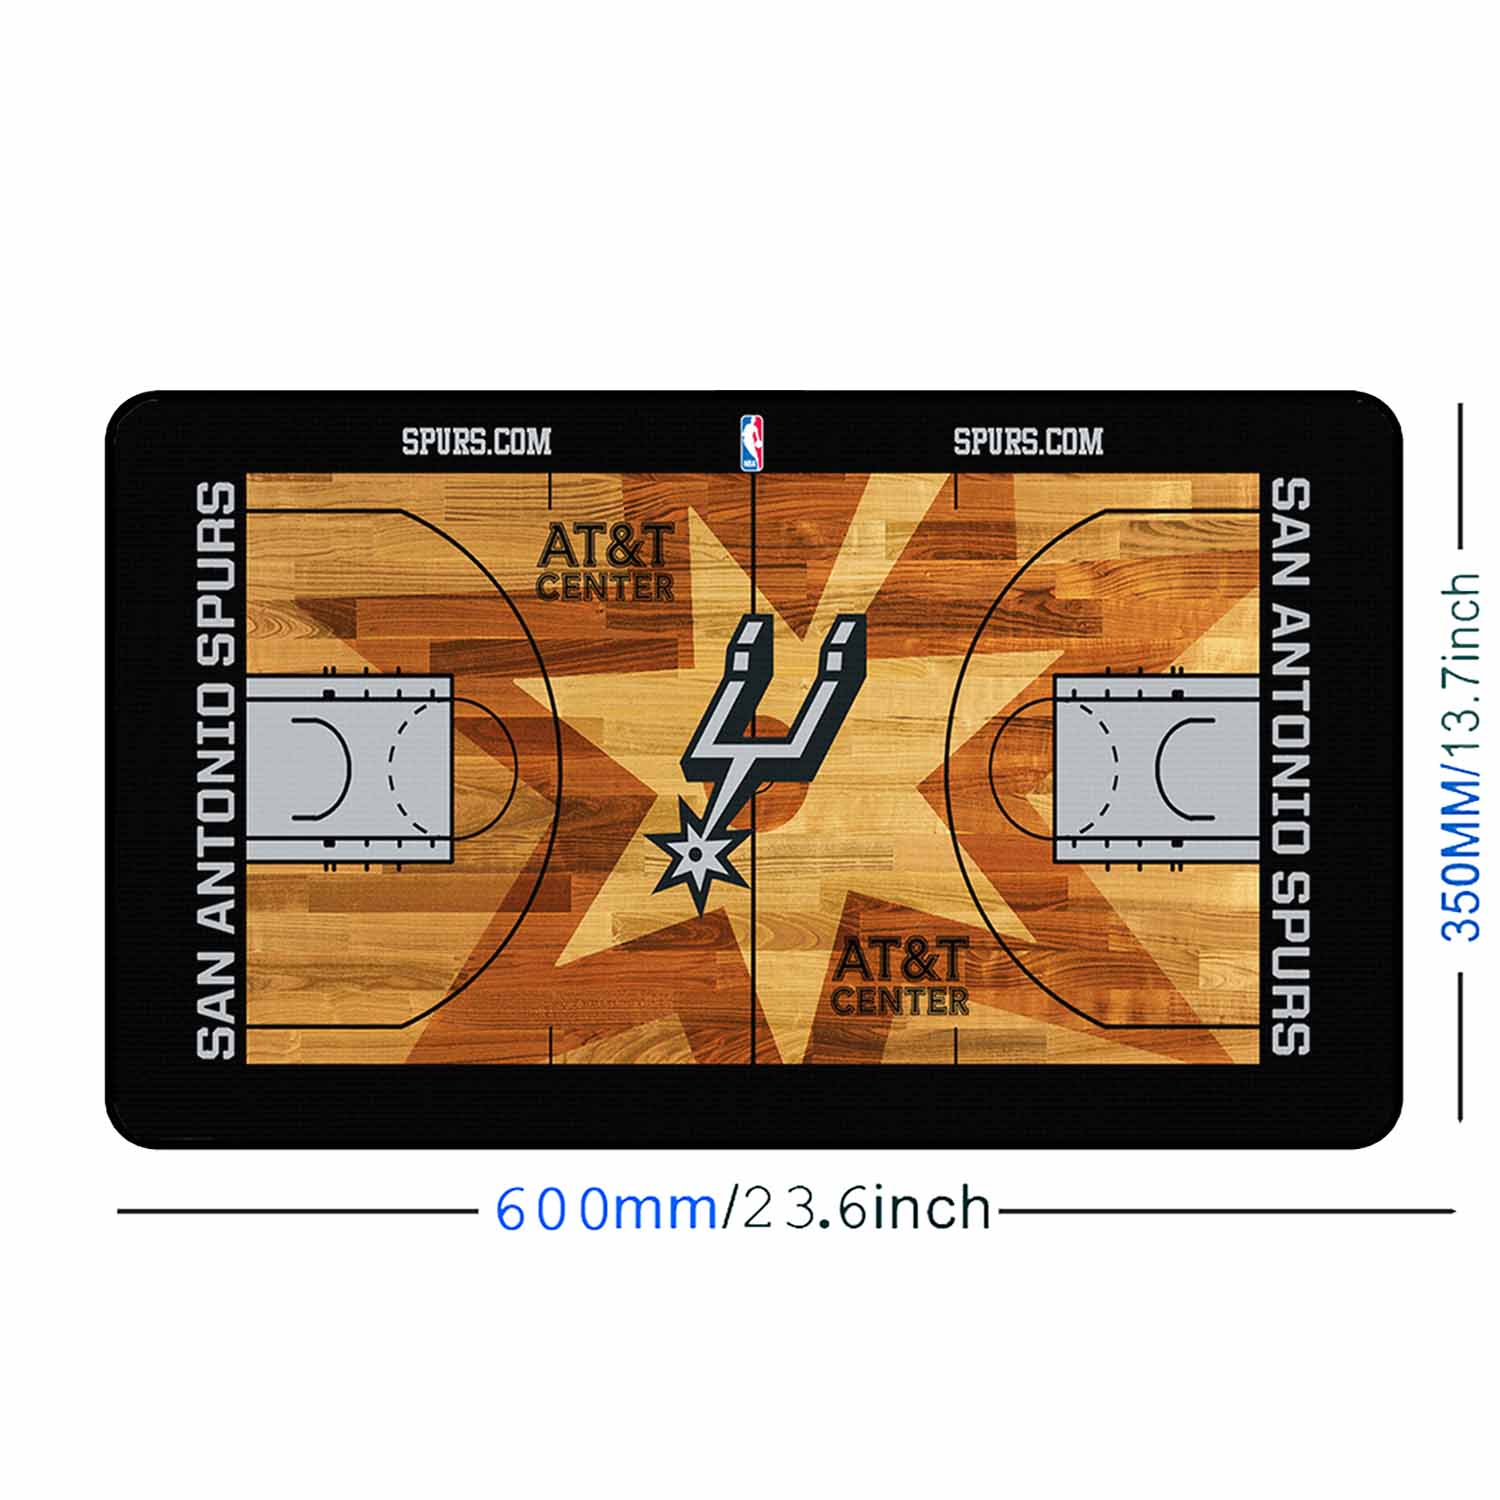 San Antonio Spurs Themed NBA Desk / Gamer Pad